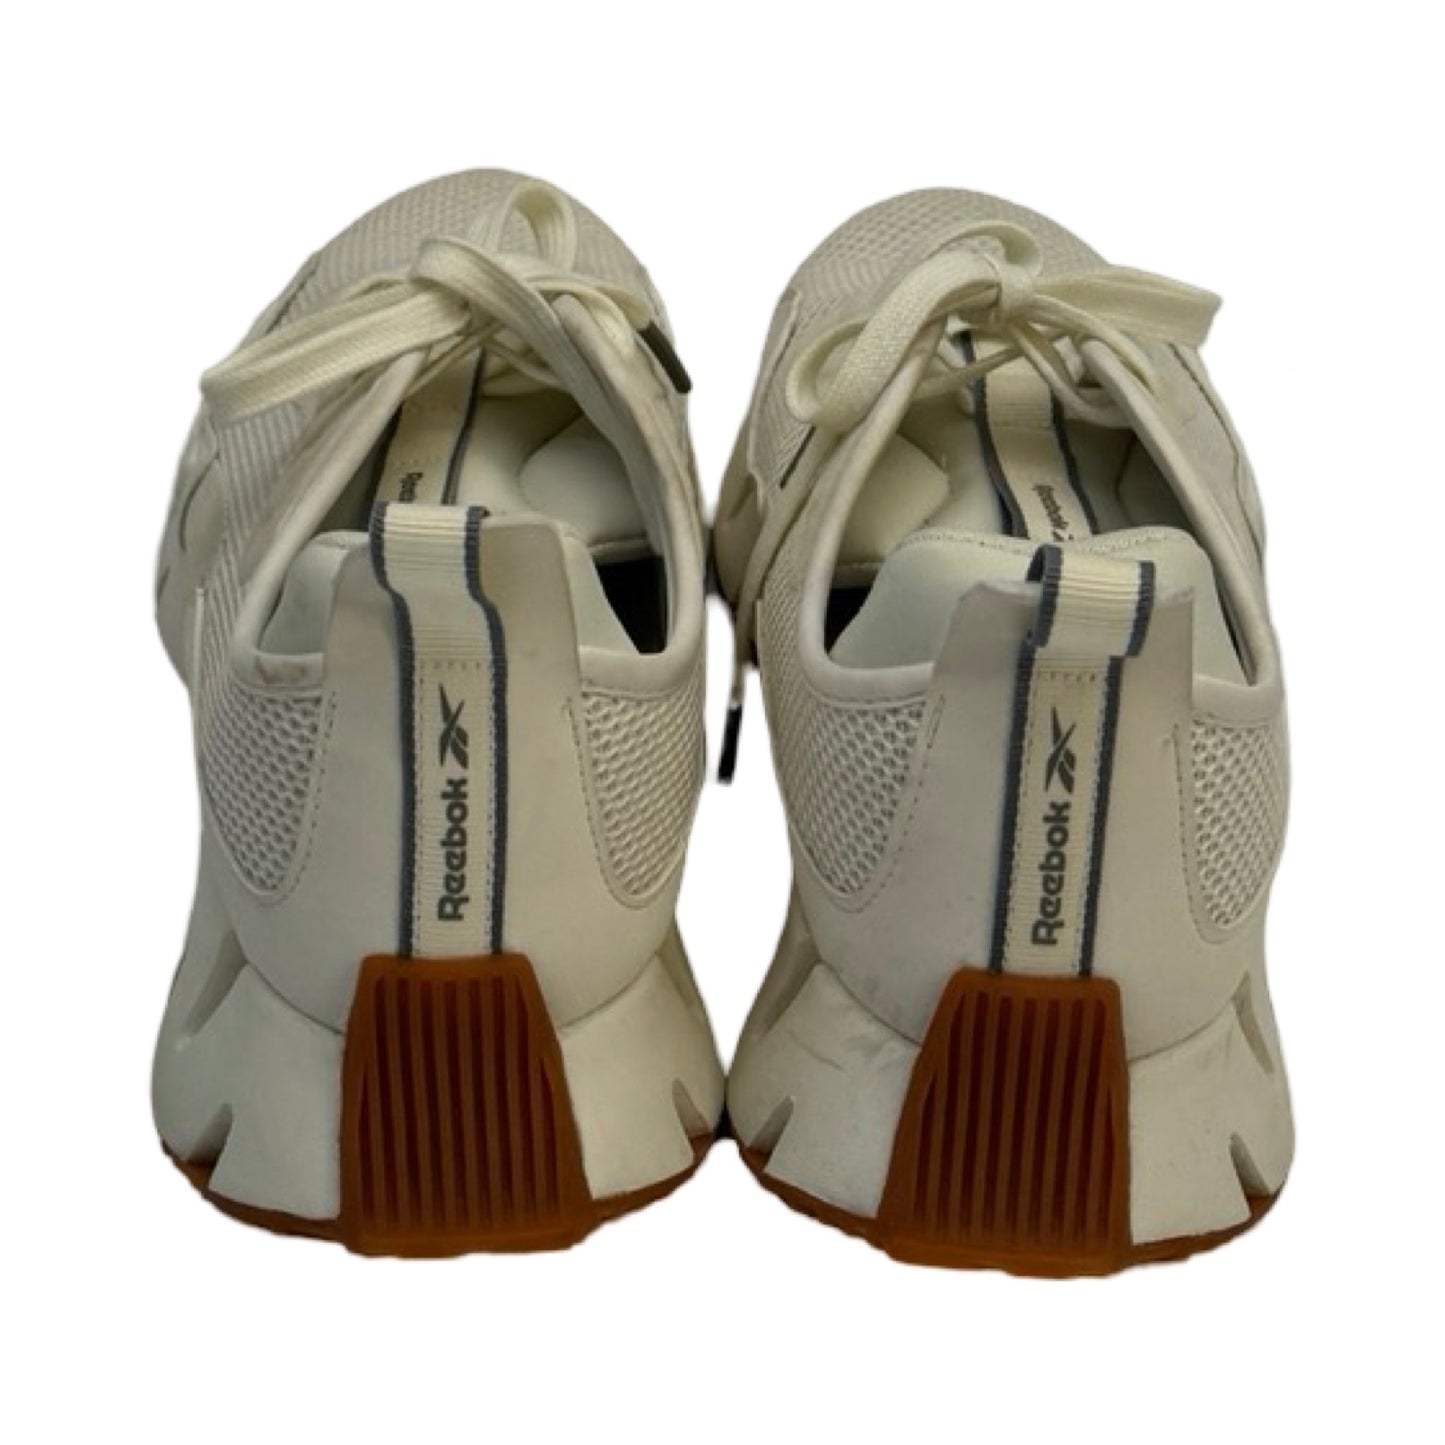 Cream Shoes Athletic Reebok, Size 10